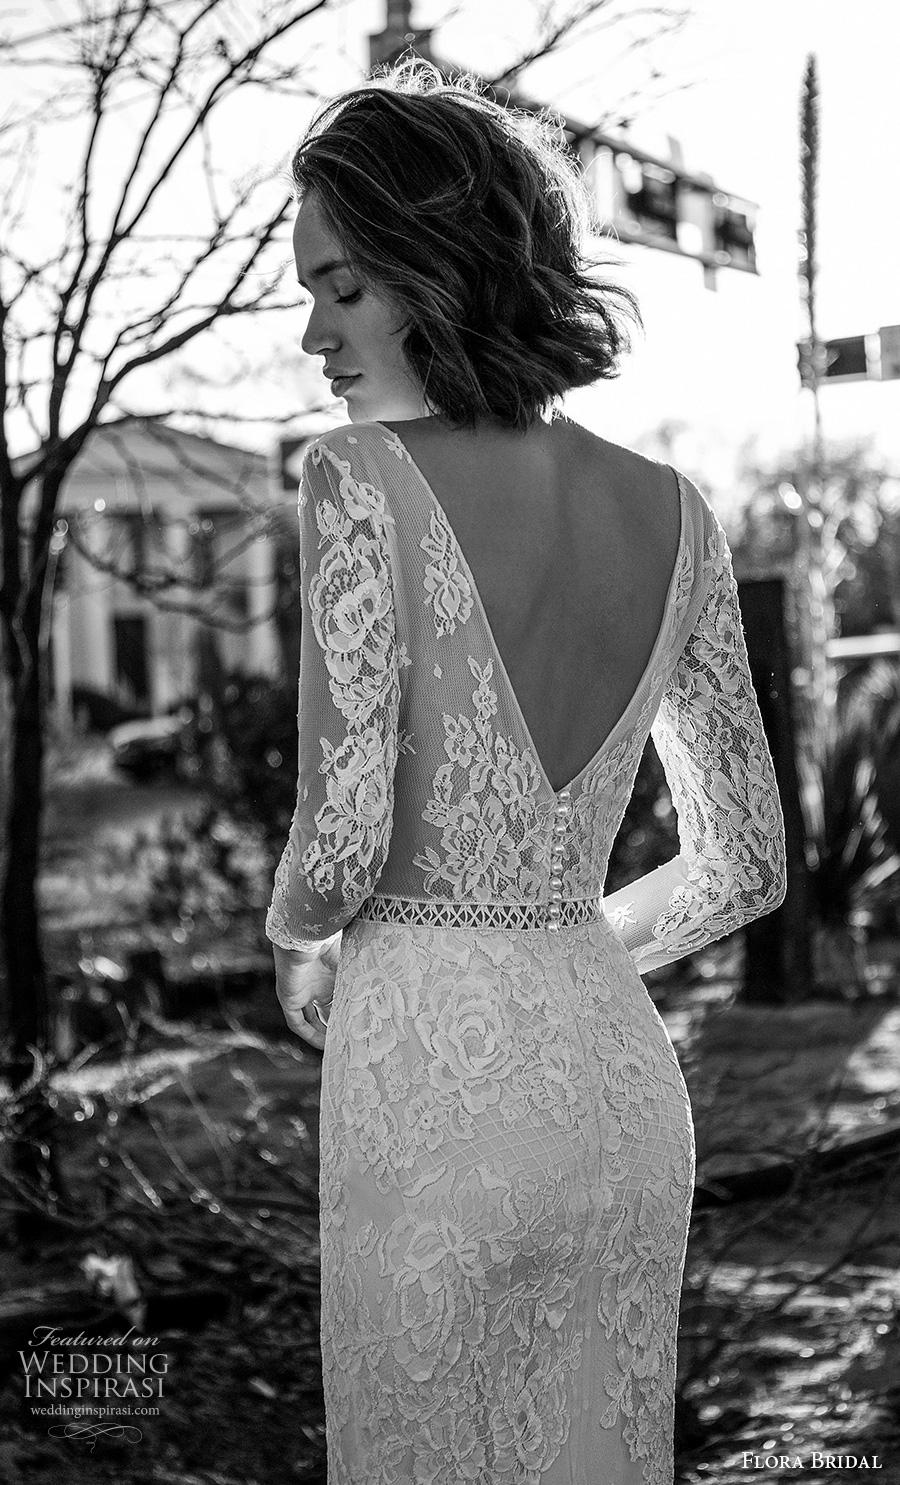 flora bridal 2019 bridal long sleeves deep v neck full embellishment elegant sheath wedding dress v back sweep train (16) zbv